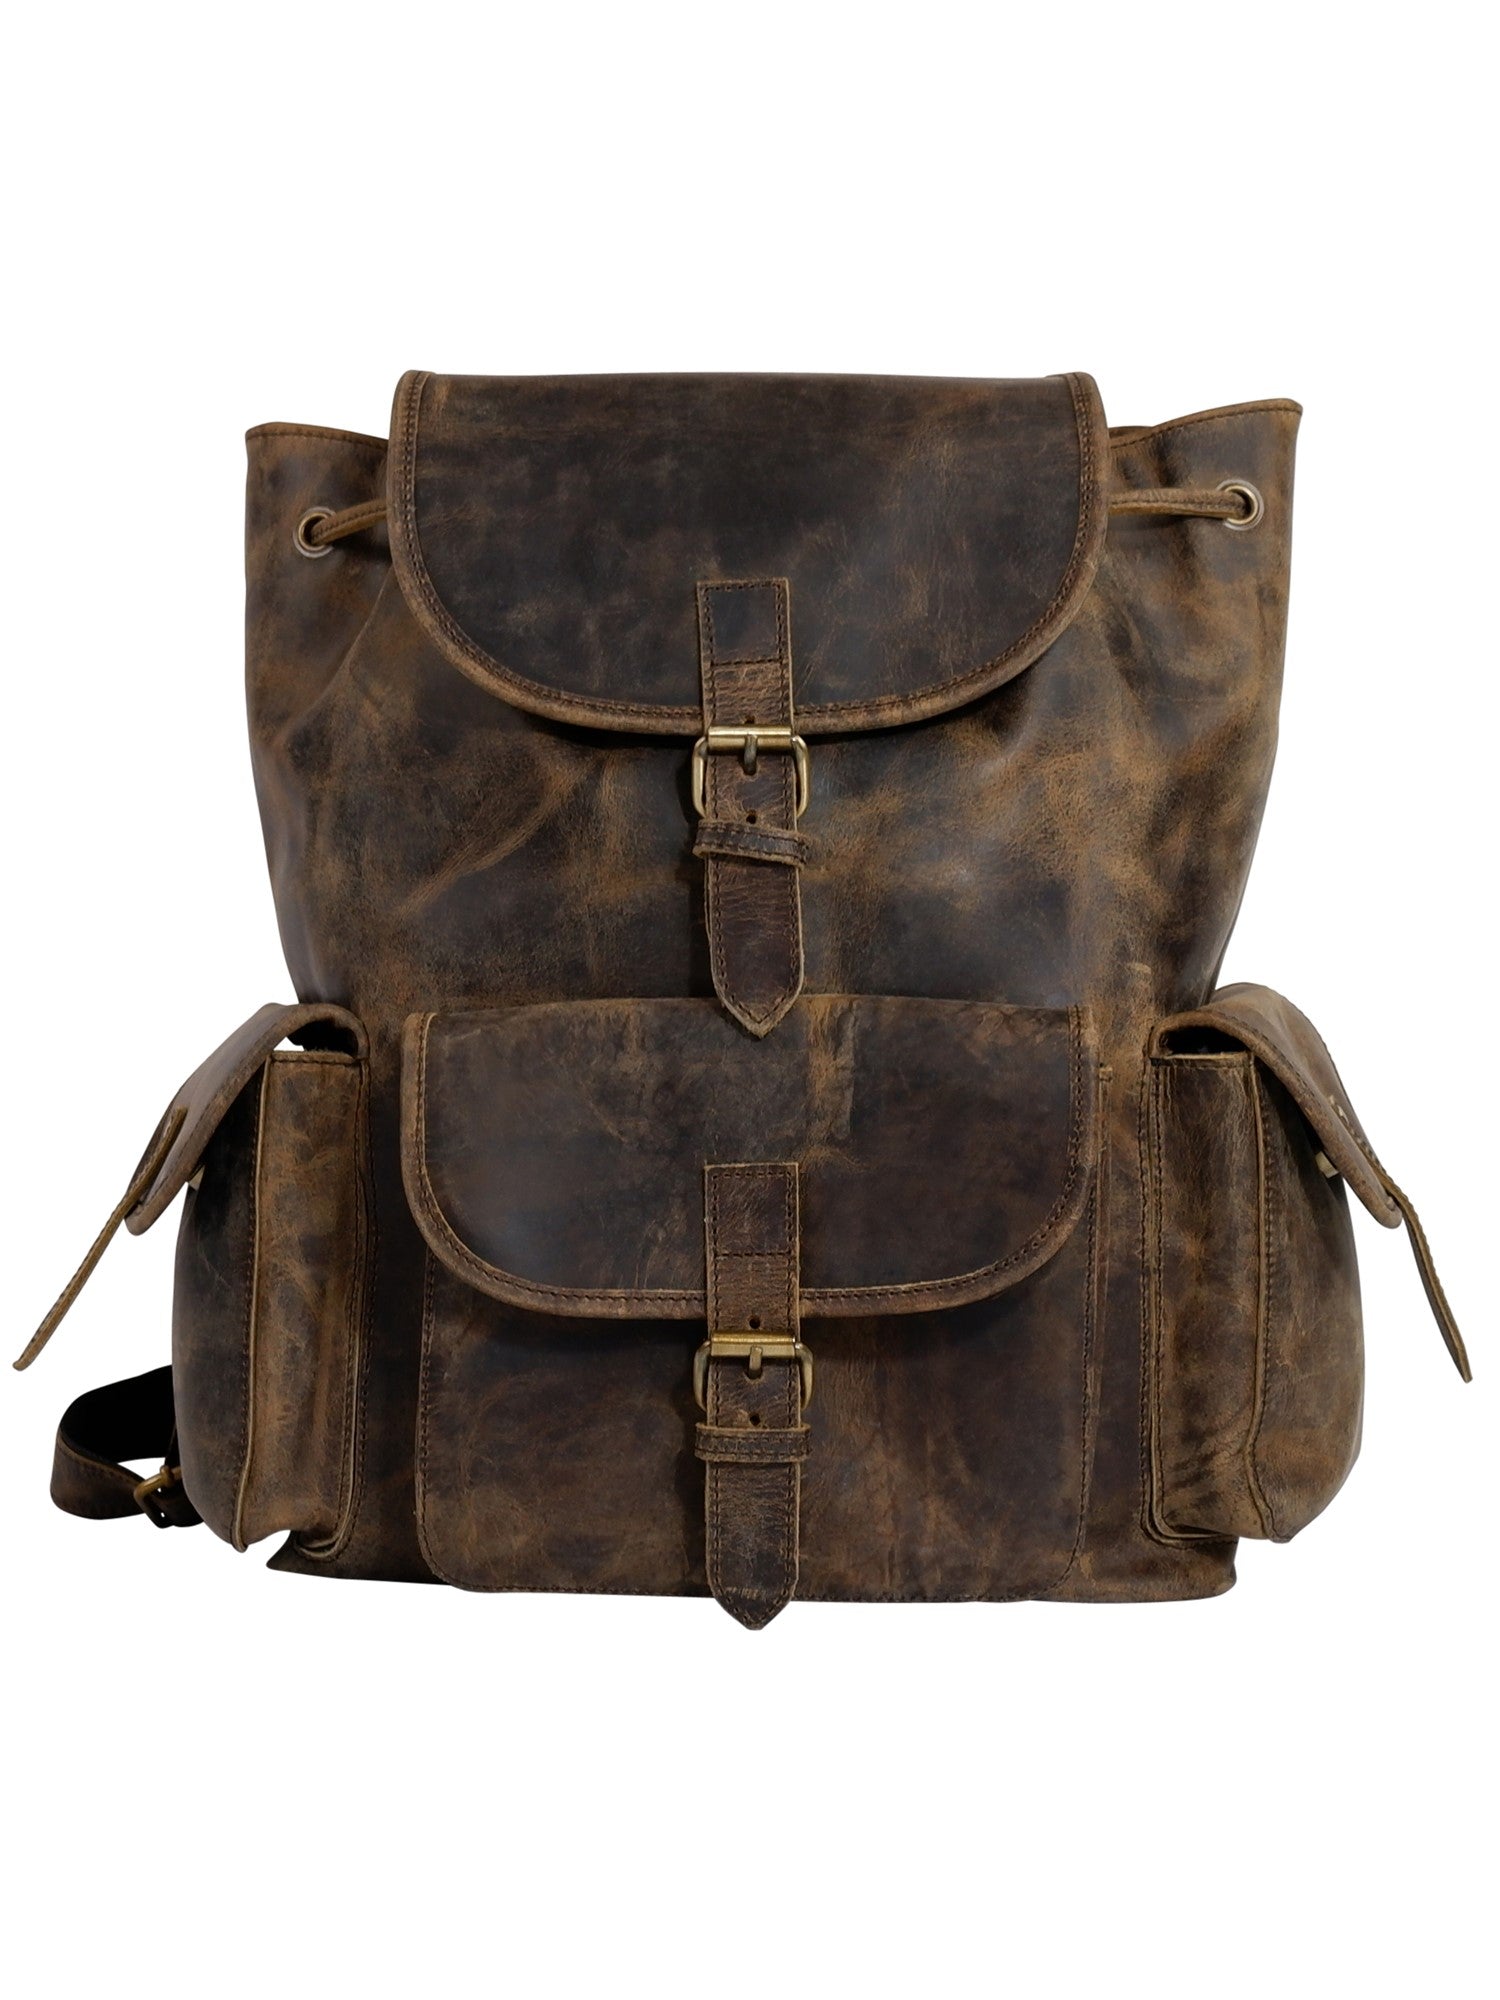 Vintage Rustic Leather Bag | Rugged Black